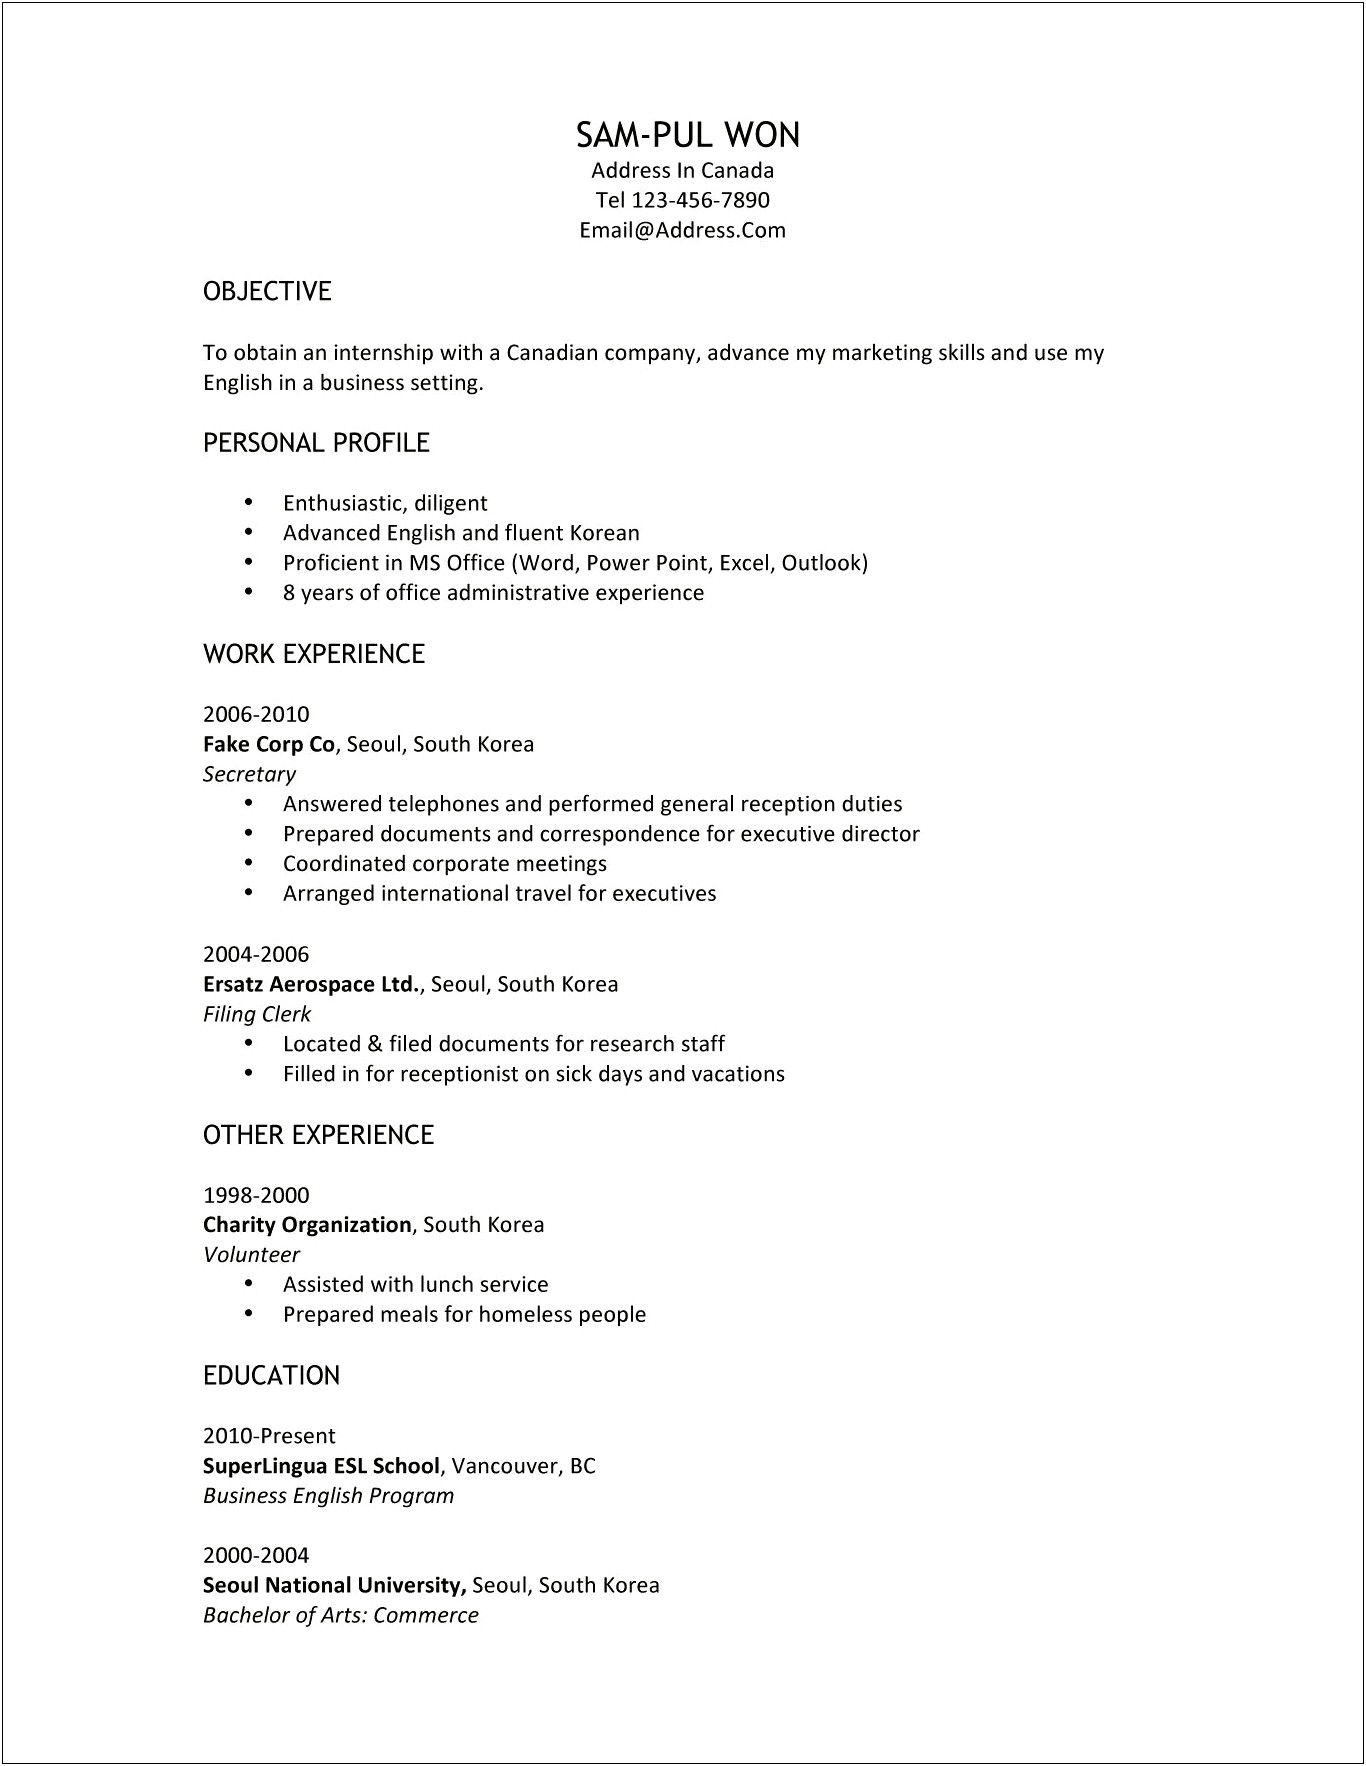 Archive Clerk Job Description For Resume